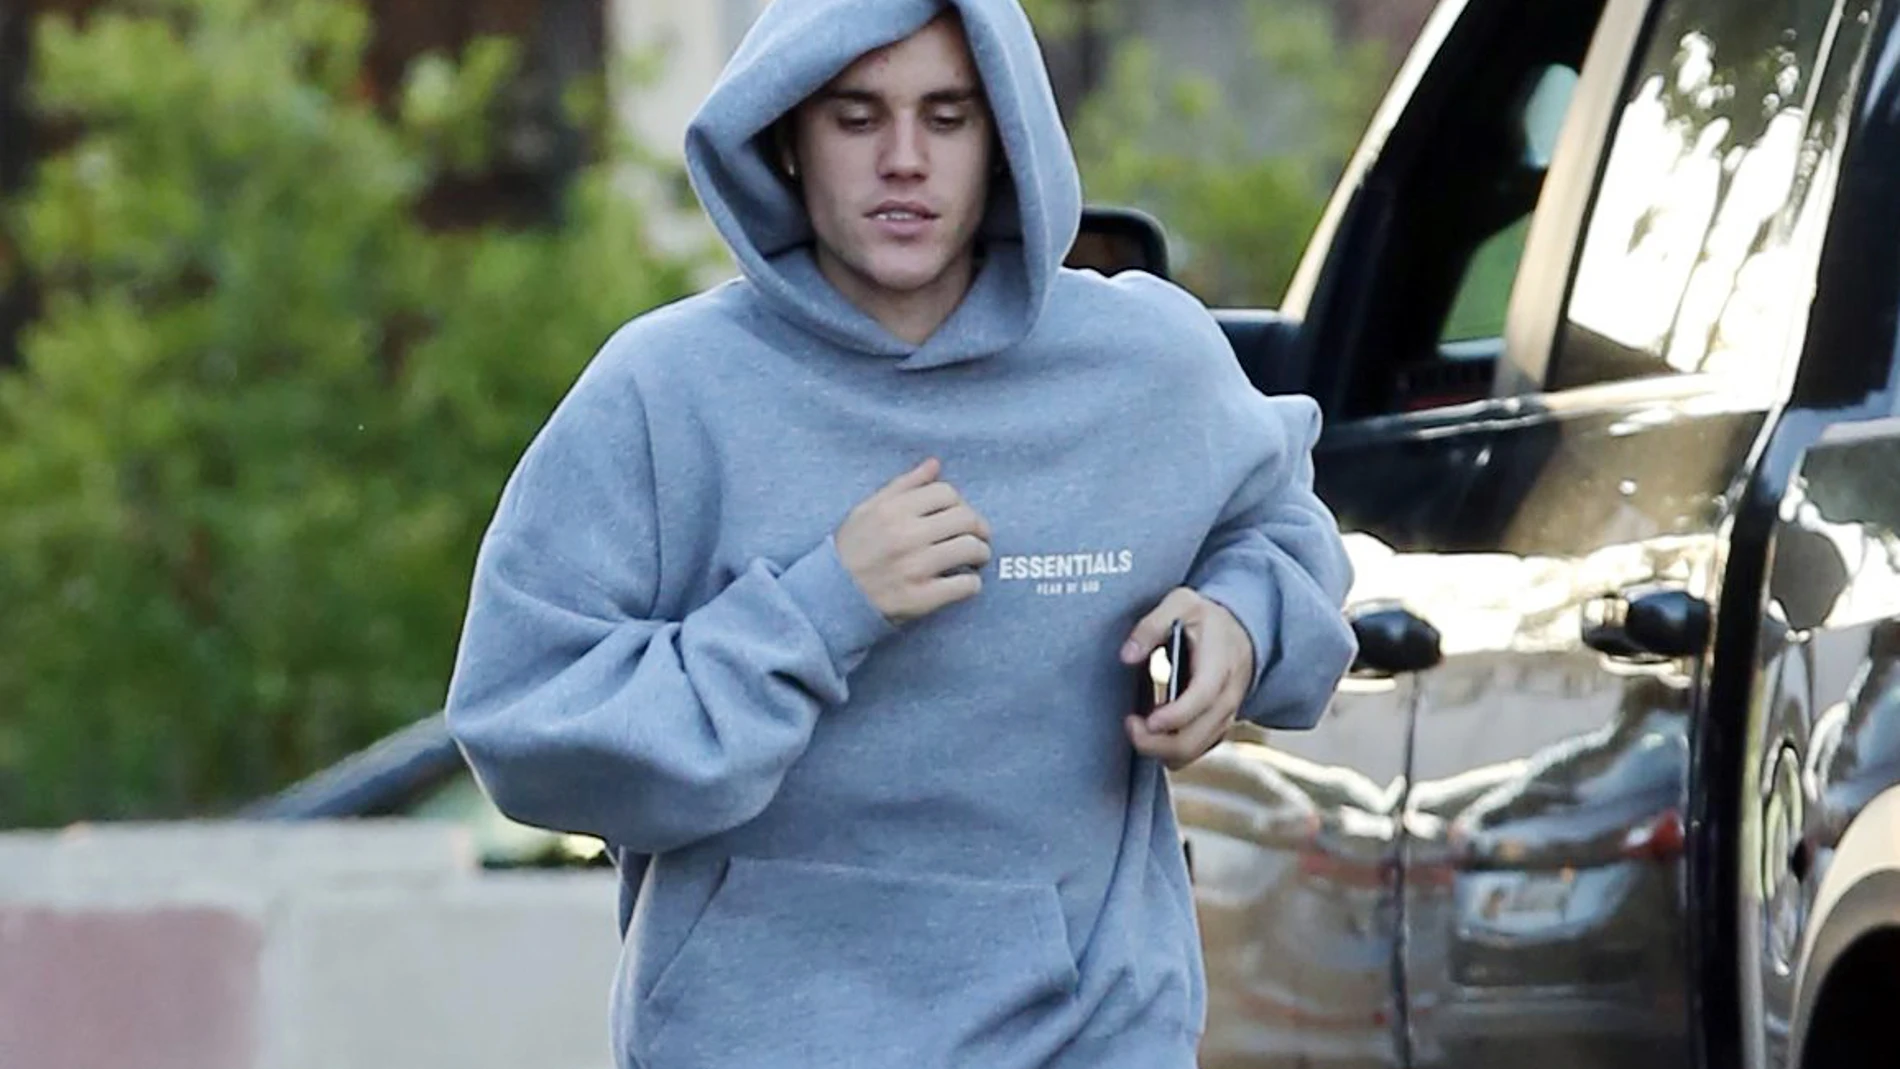 Singer Justin Bieber jogging / footing in Los Angeles02 Dec 2018